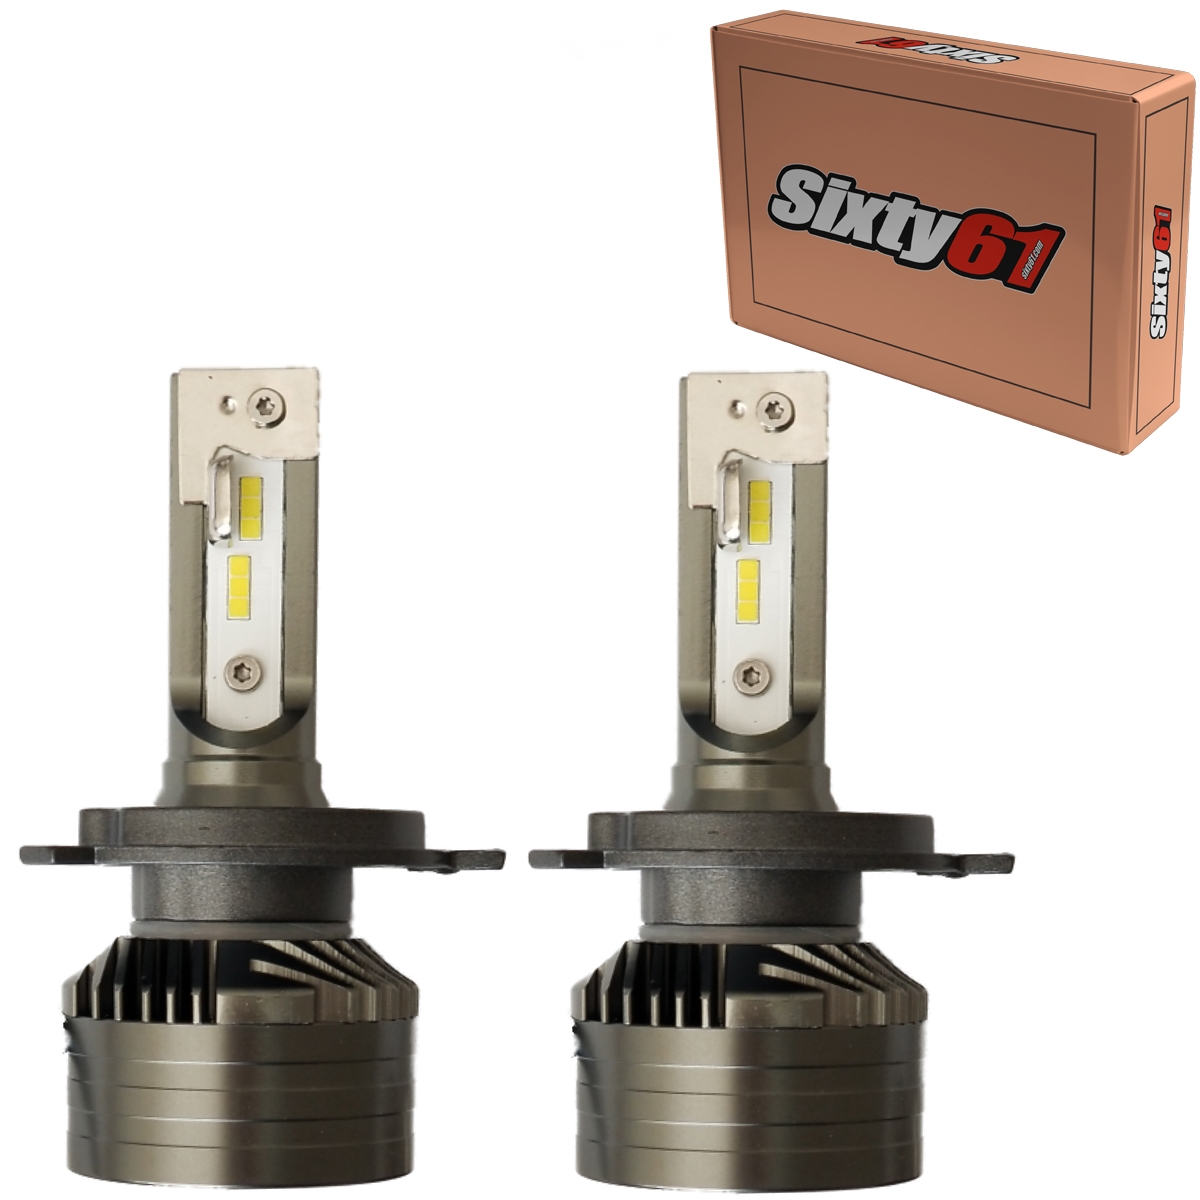 LED Headlight Bulbs for Suzuki King Quad 400 500 750 by Sixty61